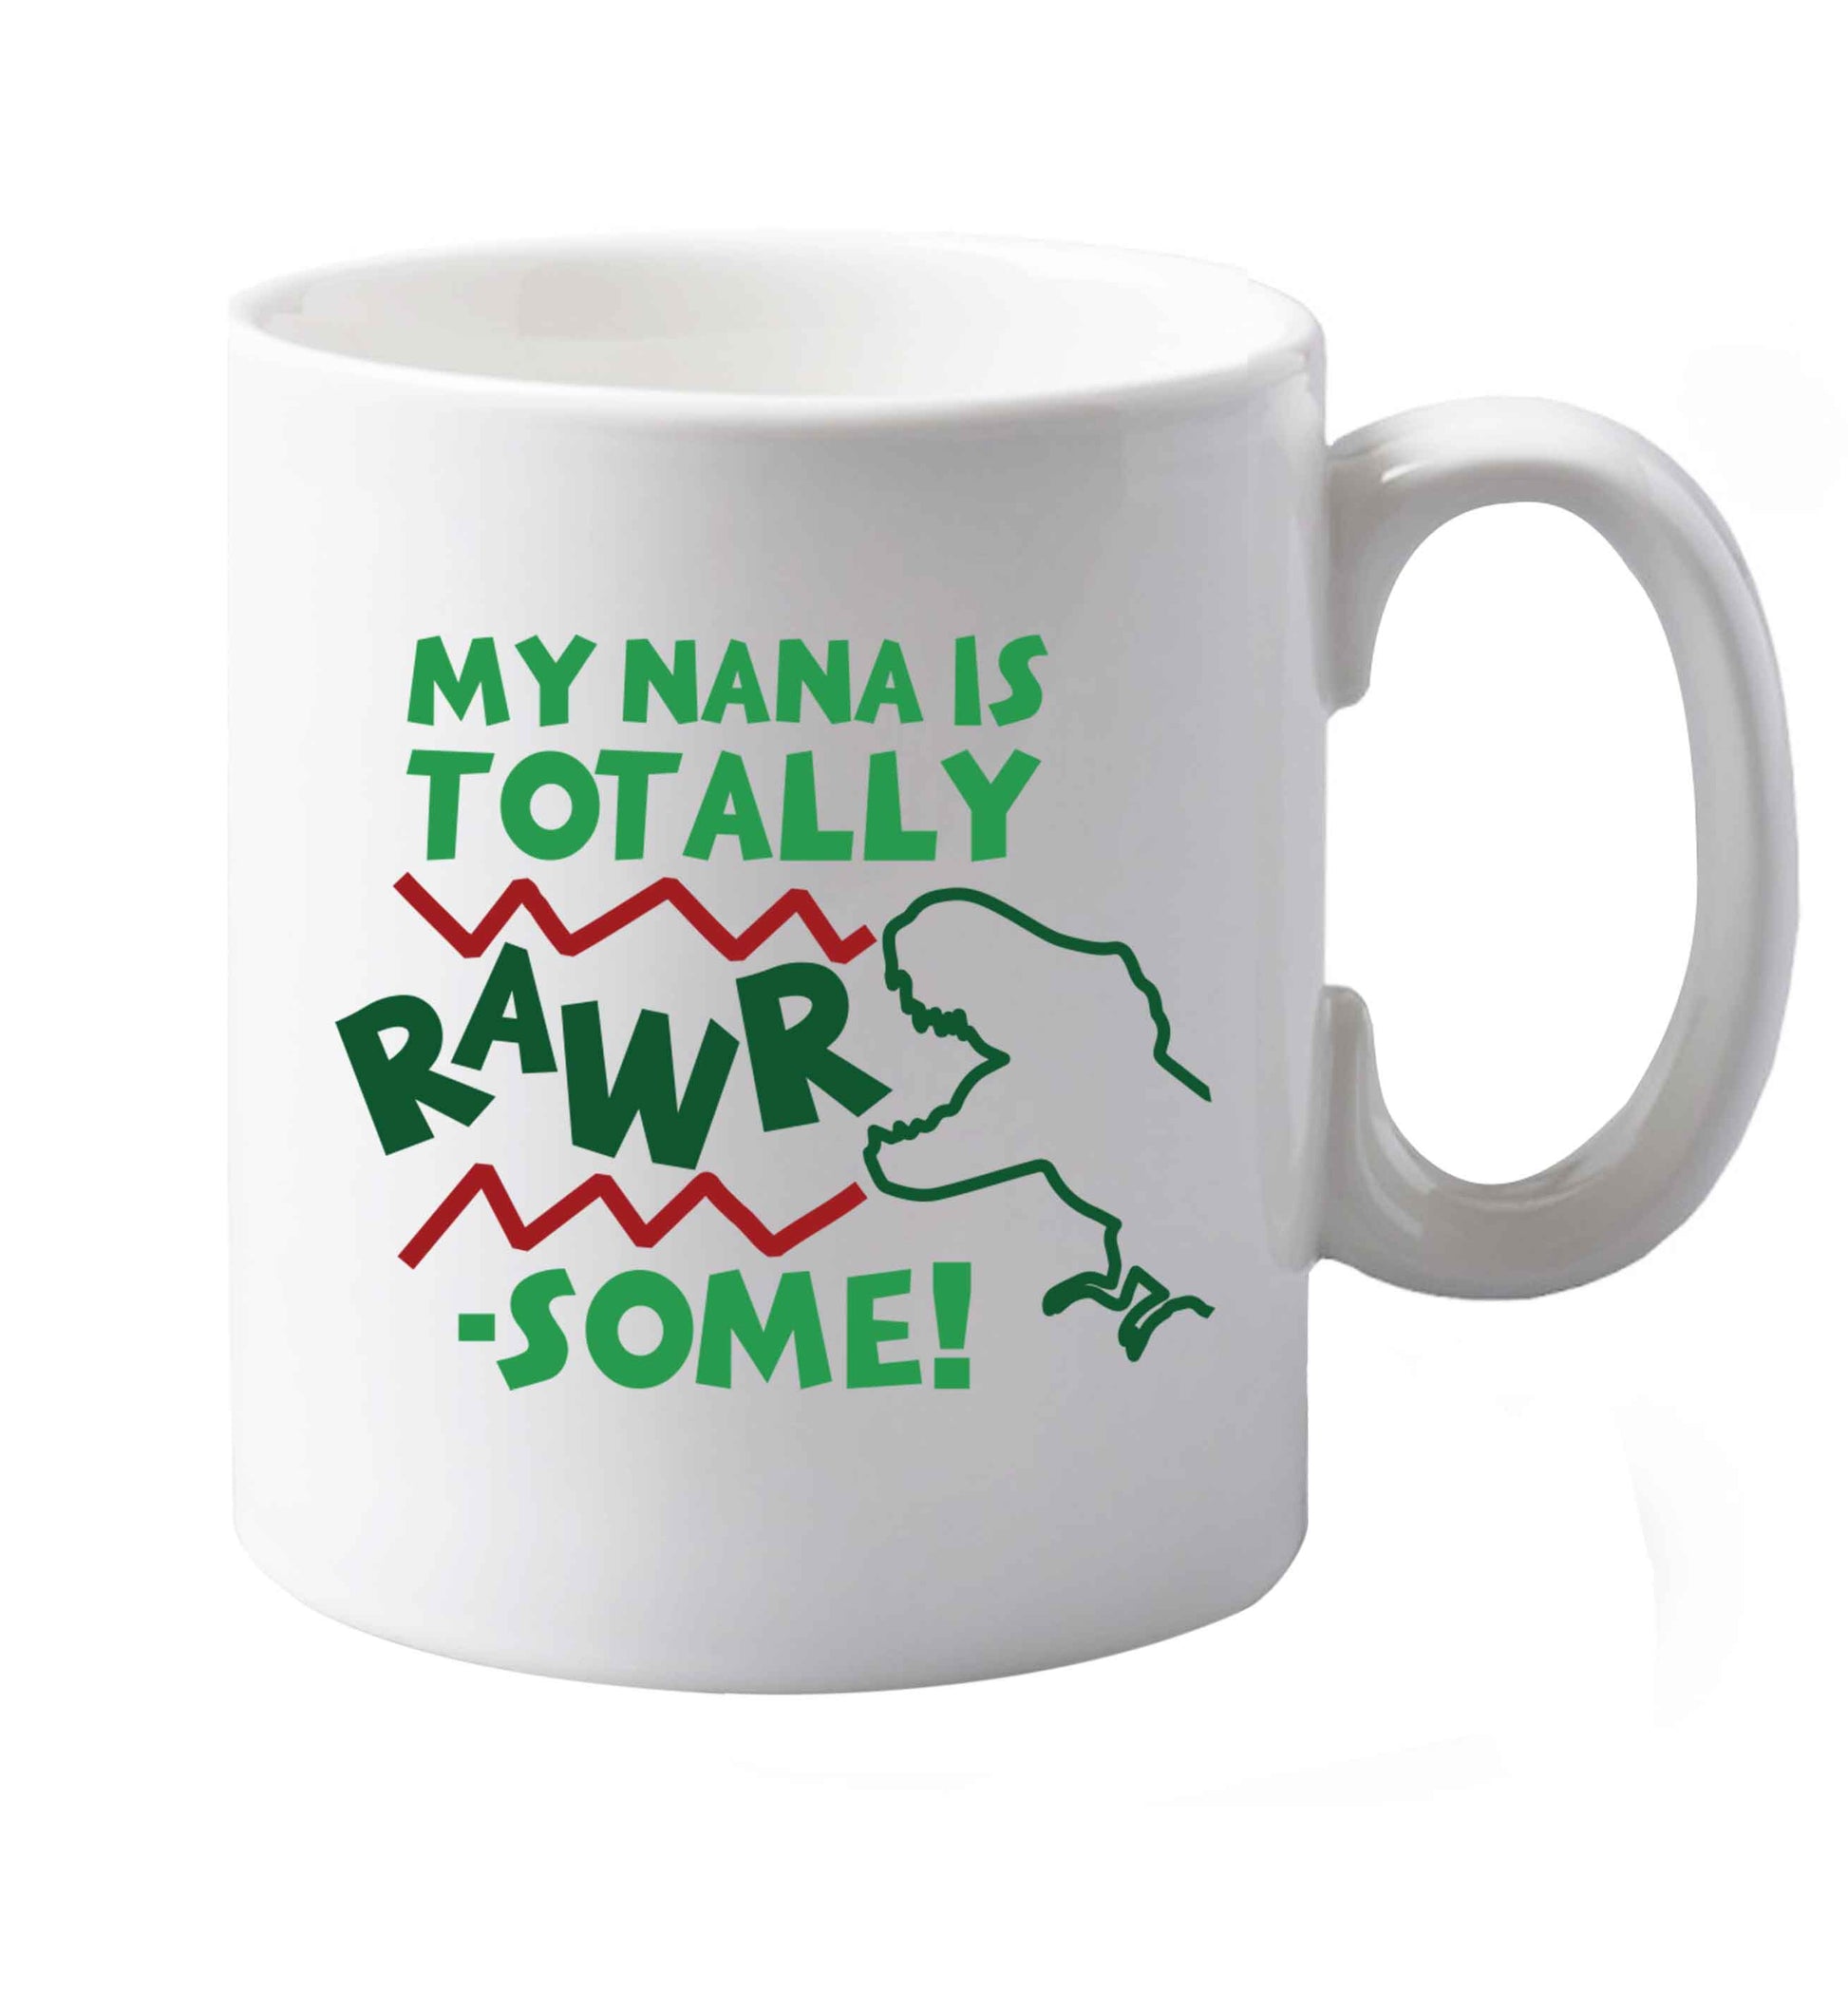 10 oz My nana is totally rawrsome ceramic mug both sides